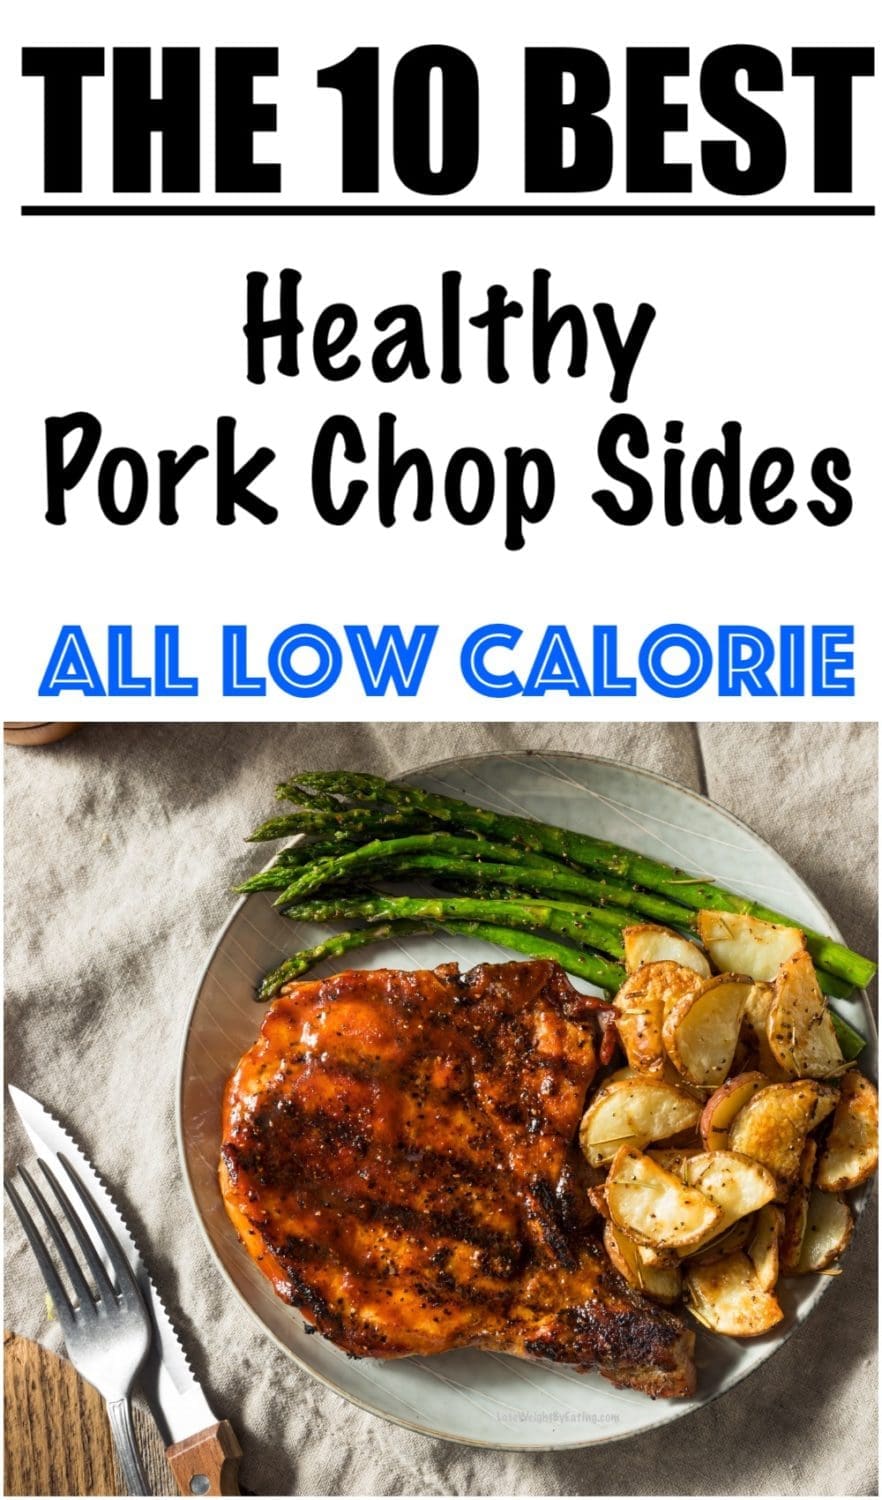 Healthy Sides for Pork Chops